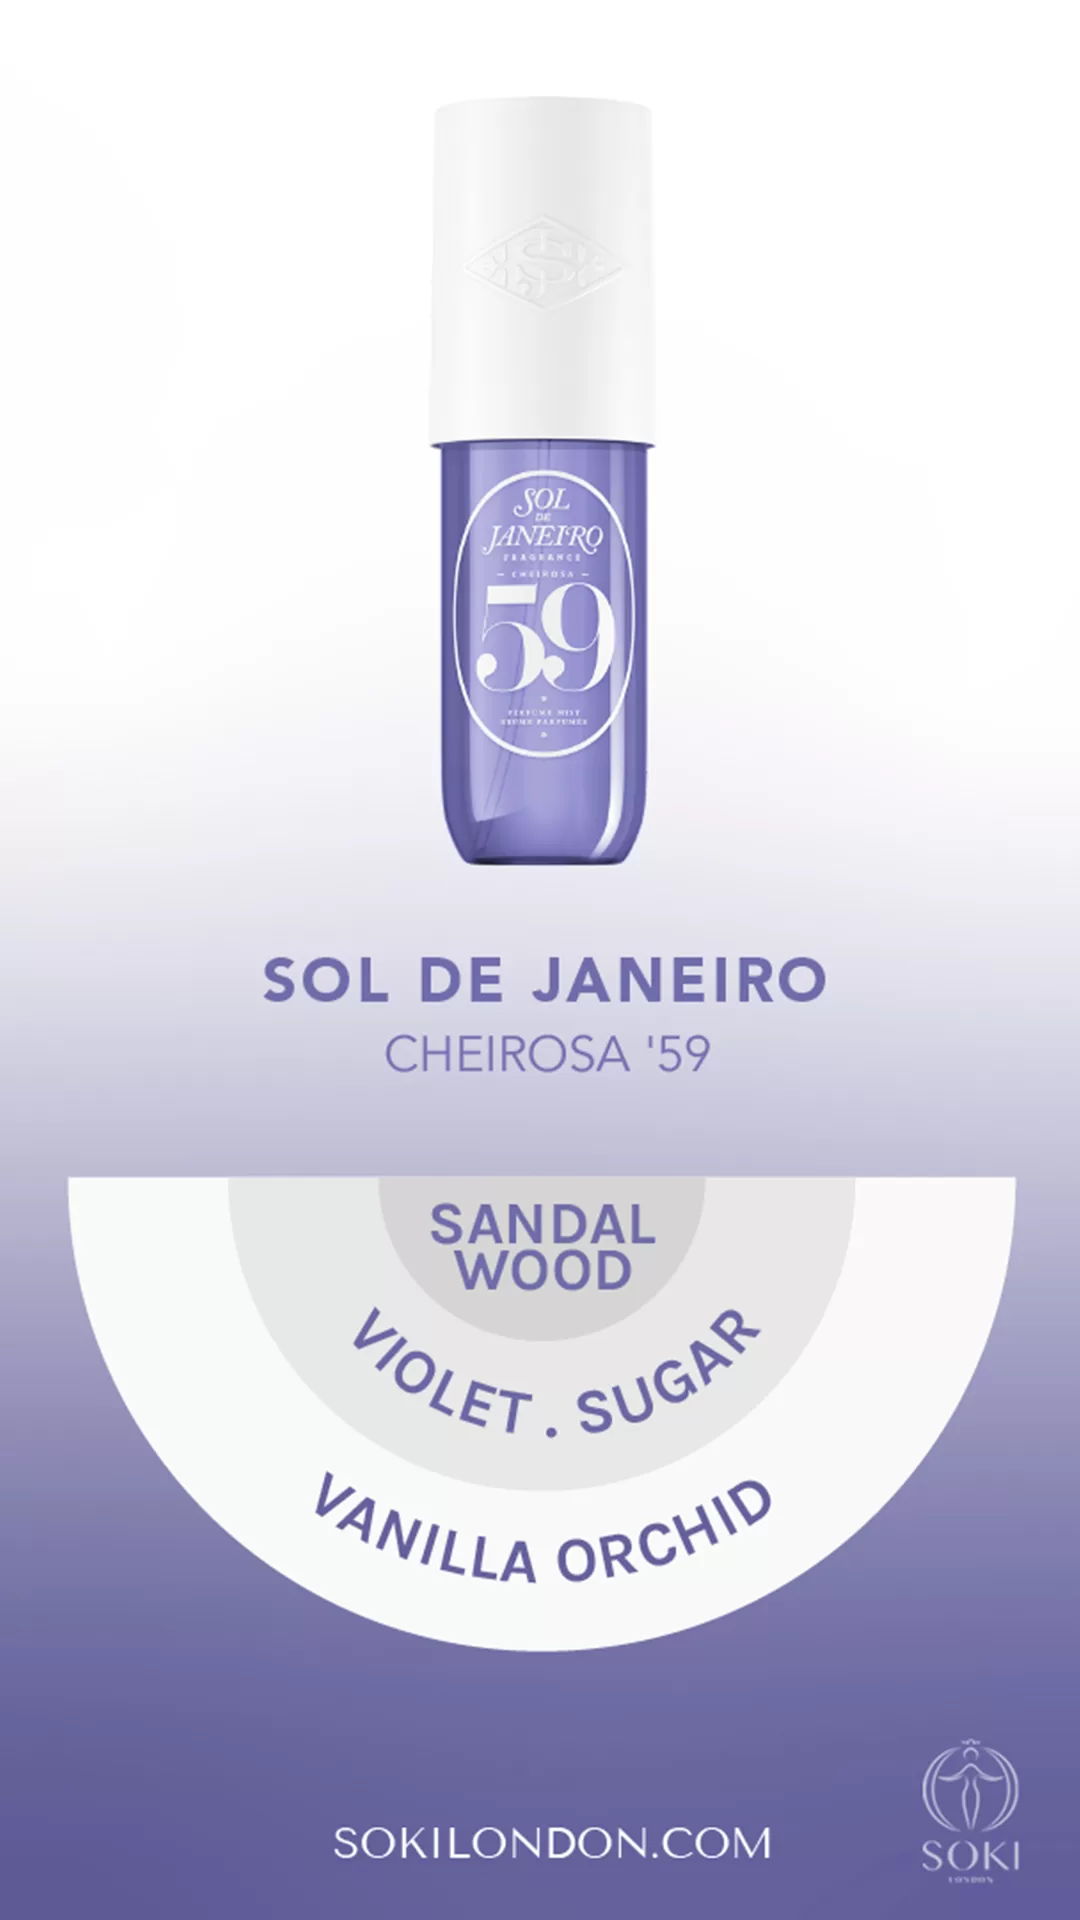 SOL DE JANEIRO
CHERIOSA 59 PERFUME MIST